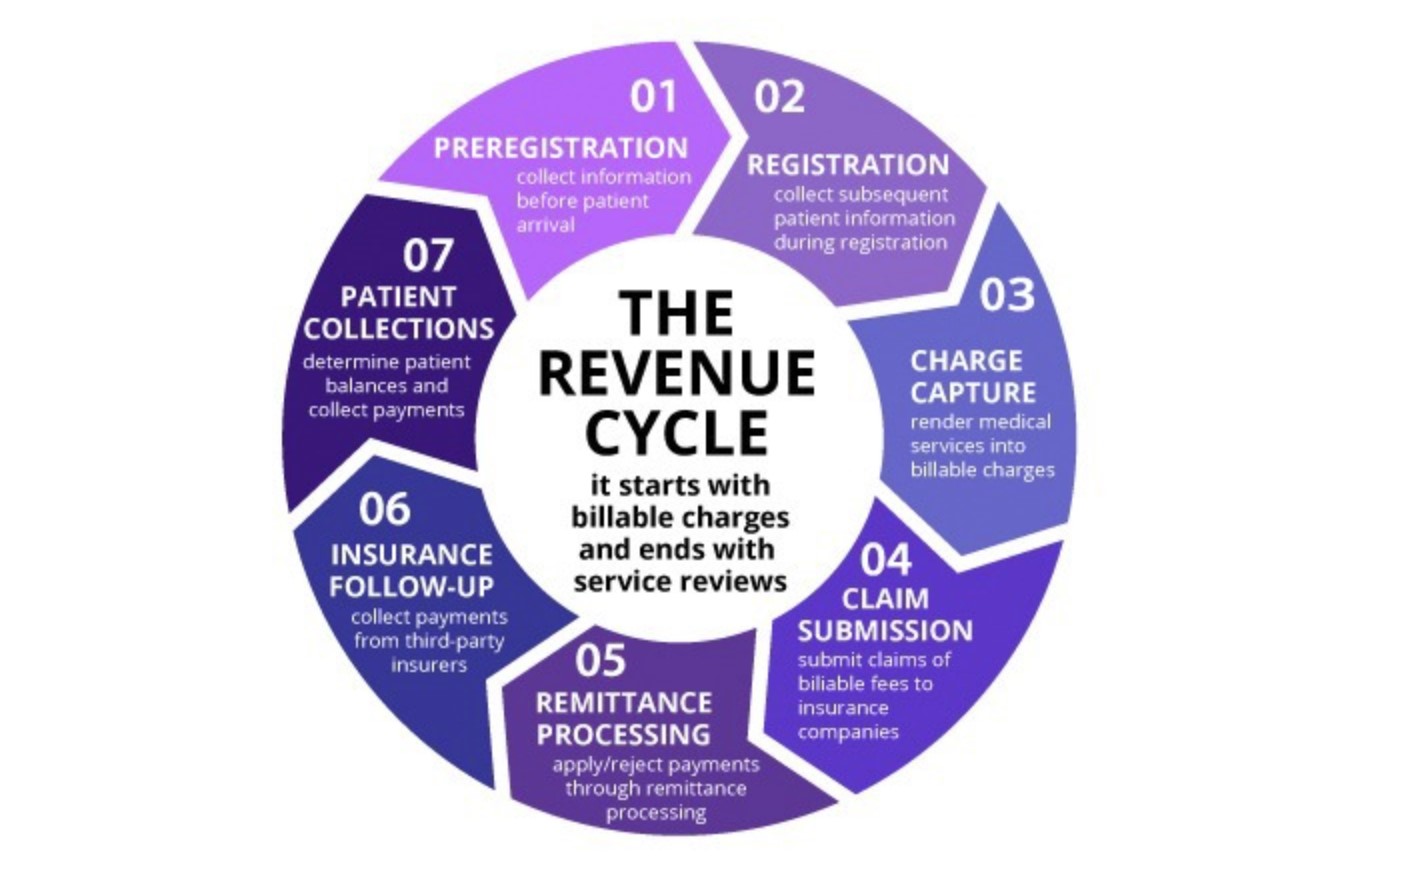 Hospital Revenue Cycle Management